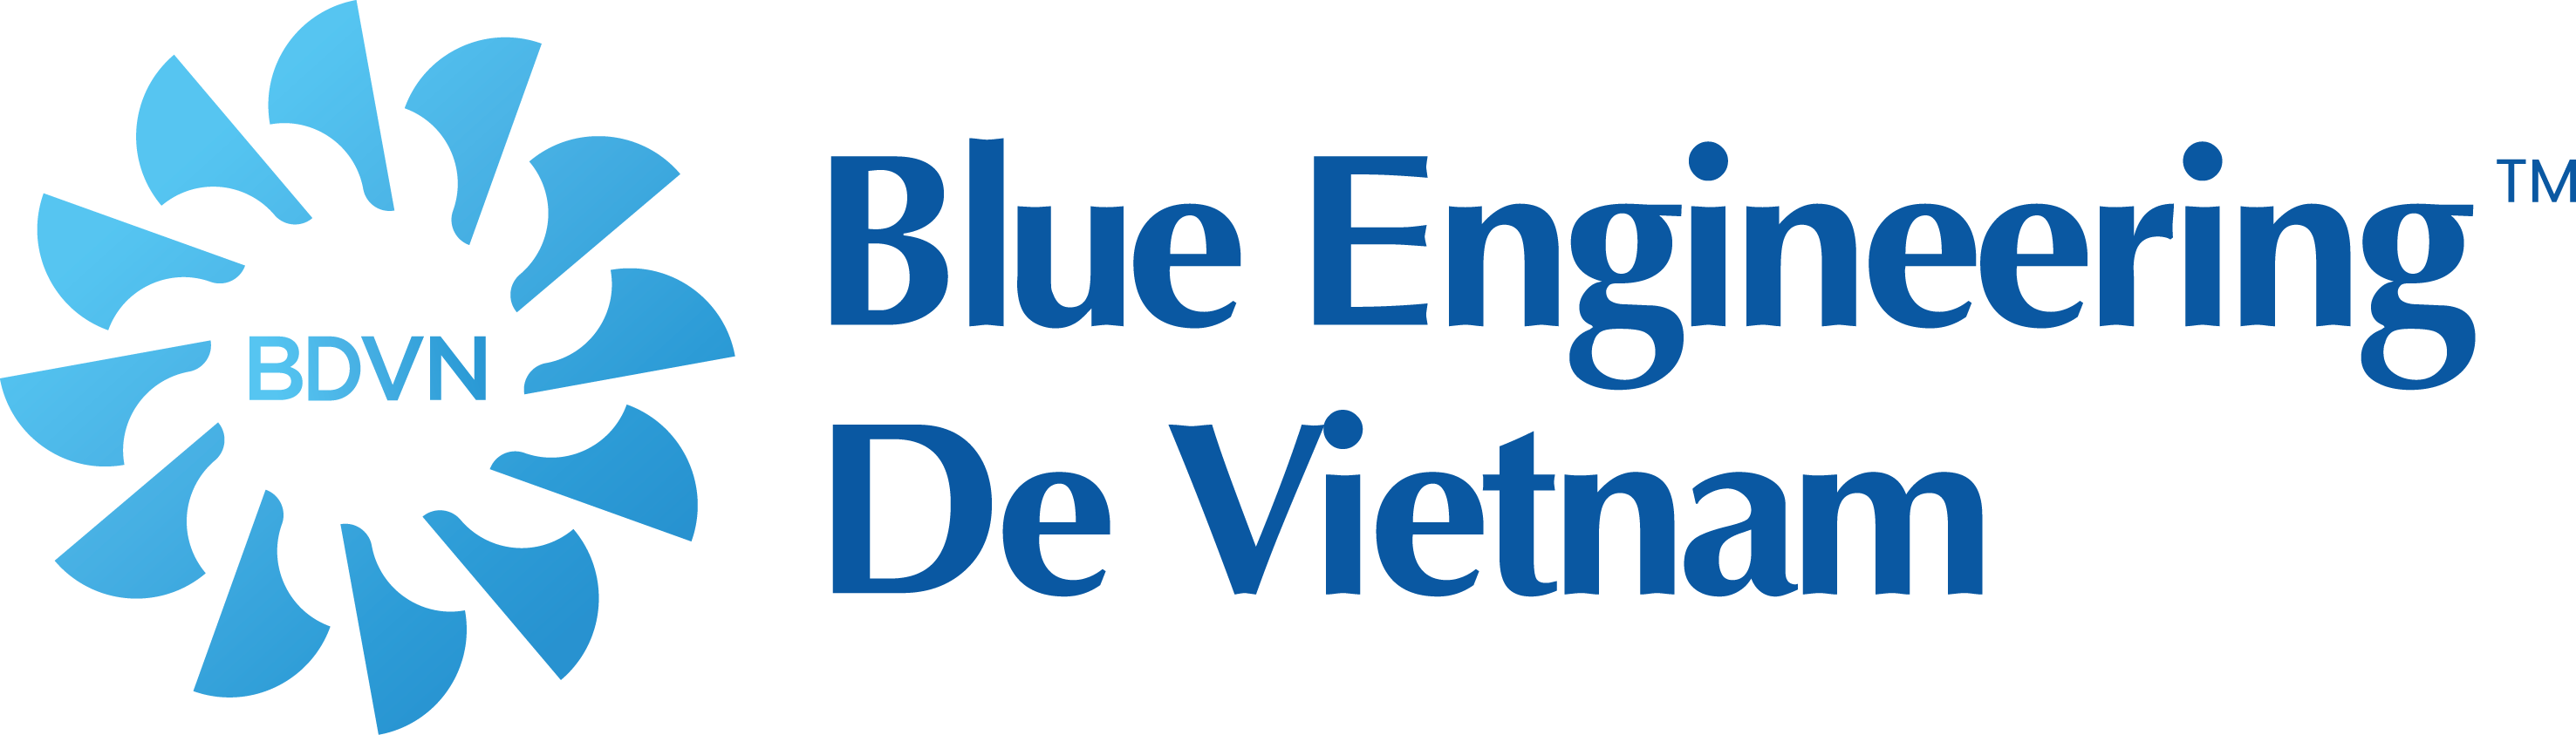 Công ty Cổ phần Blue Engineering De Vietnam